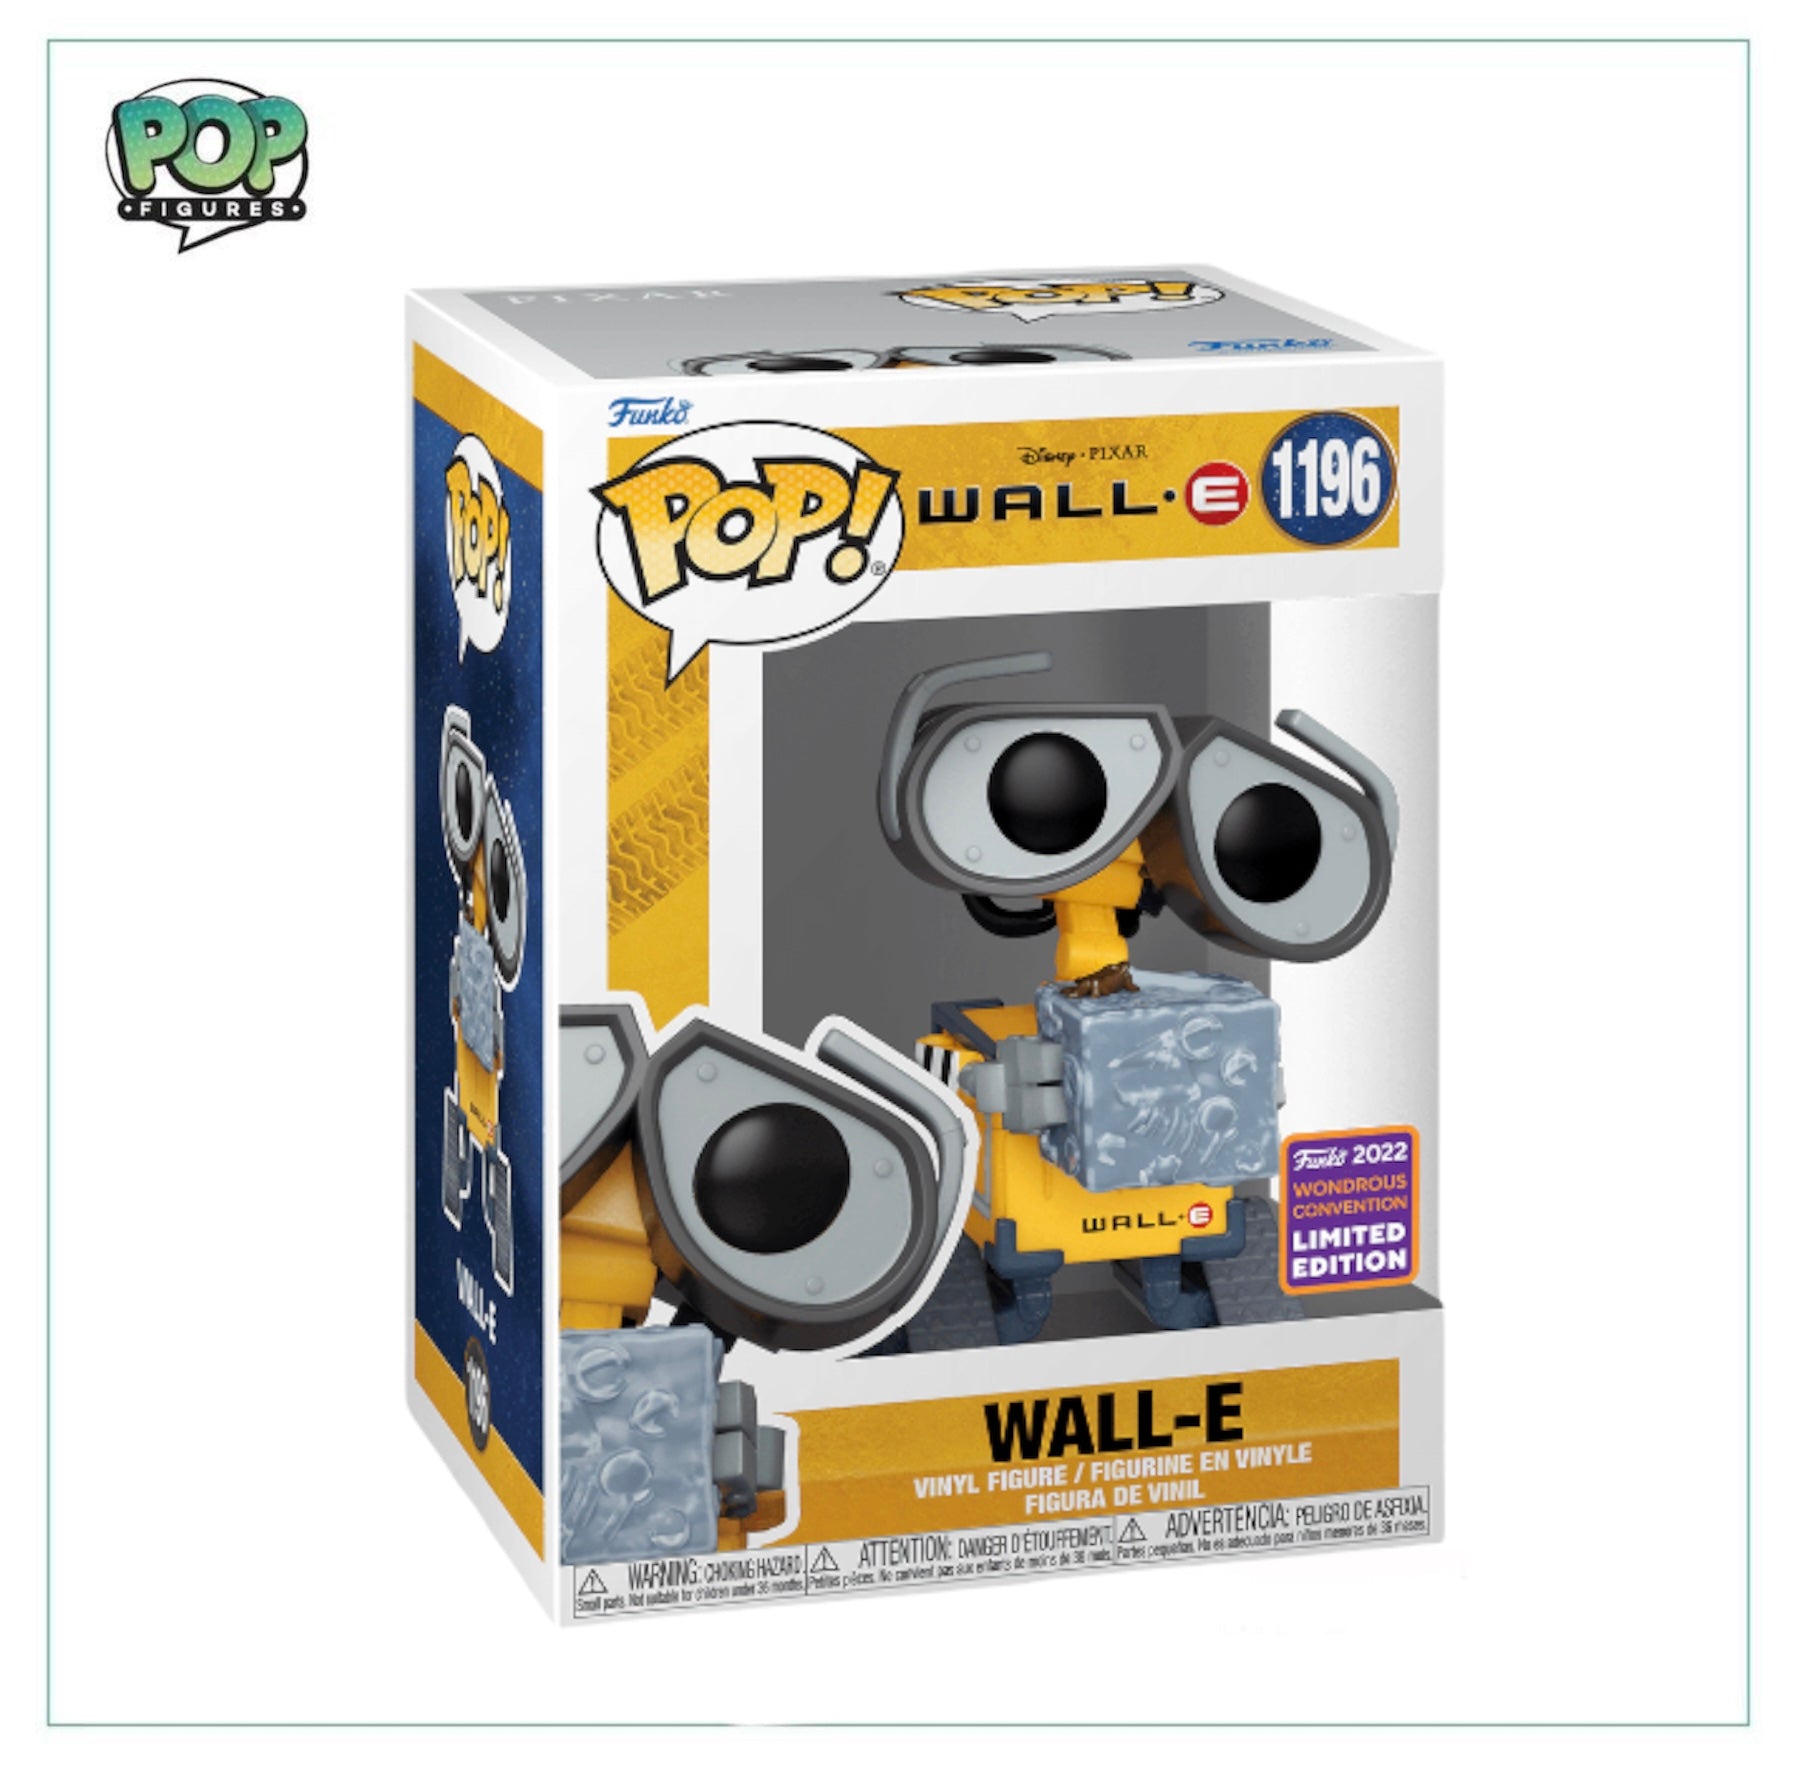 Wall-E #1196 Funko Pop! Disney - 2022 Wonderous Convention Limited Edition